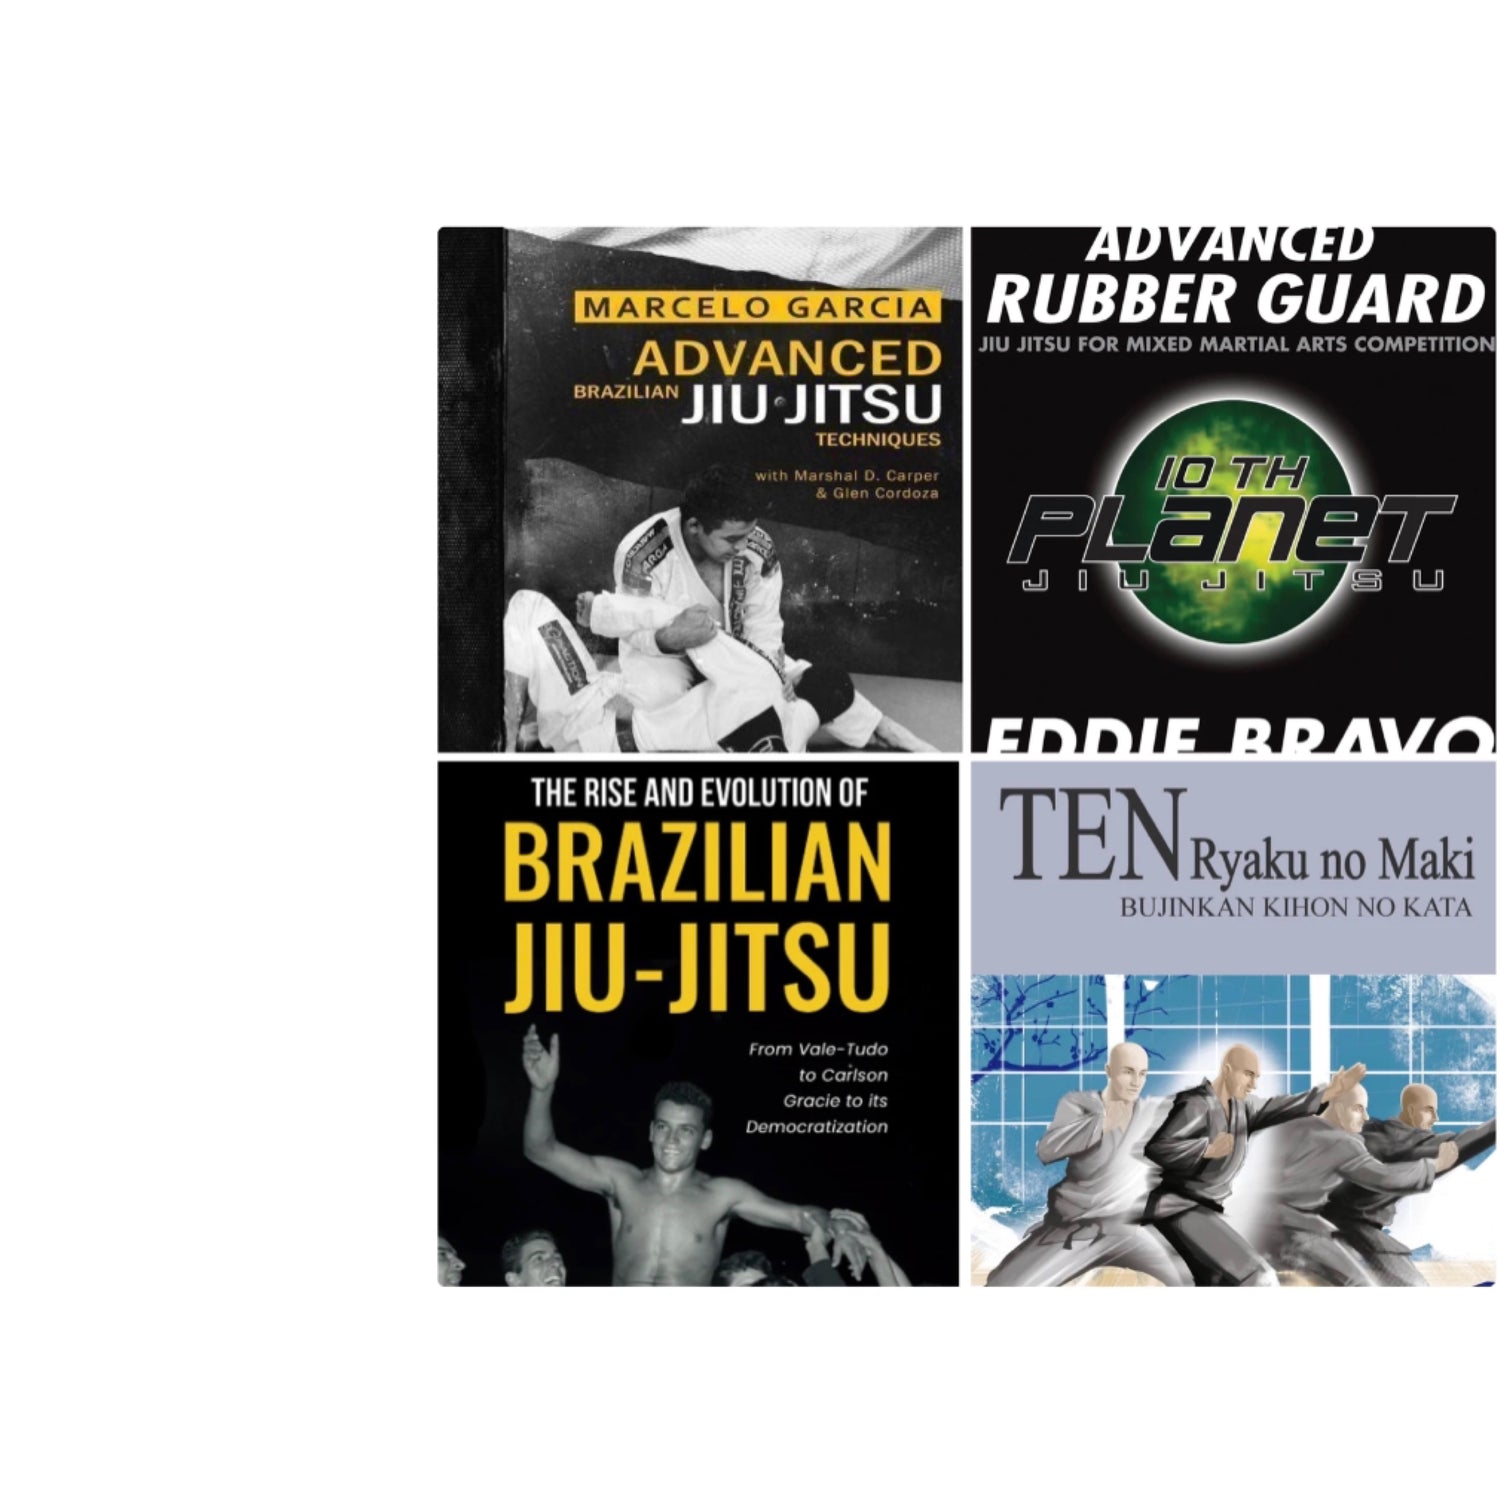 Martial Arts Books